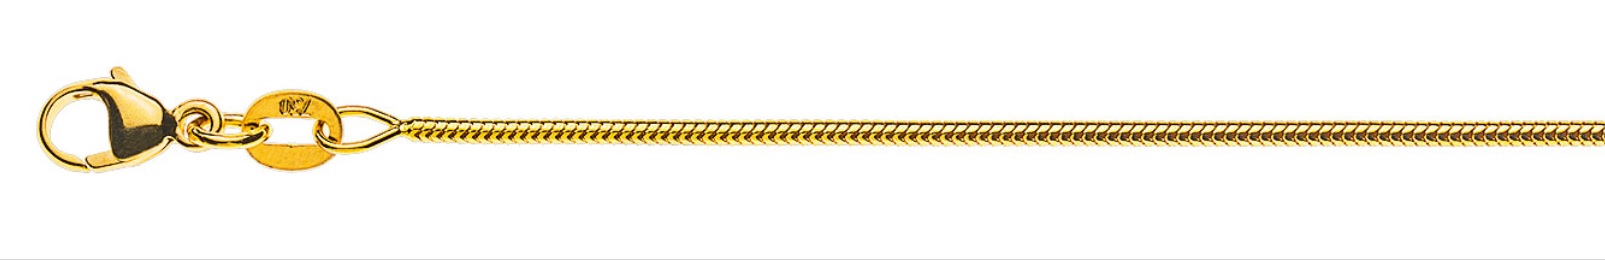 AURONOS Prestige Necklace yellow gold 18K snake chain 45cm 1.2mm